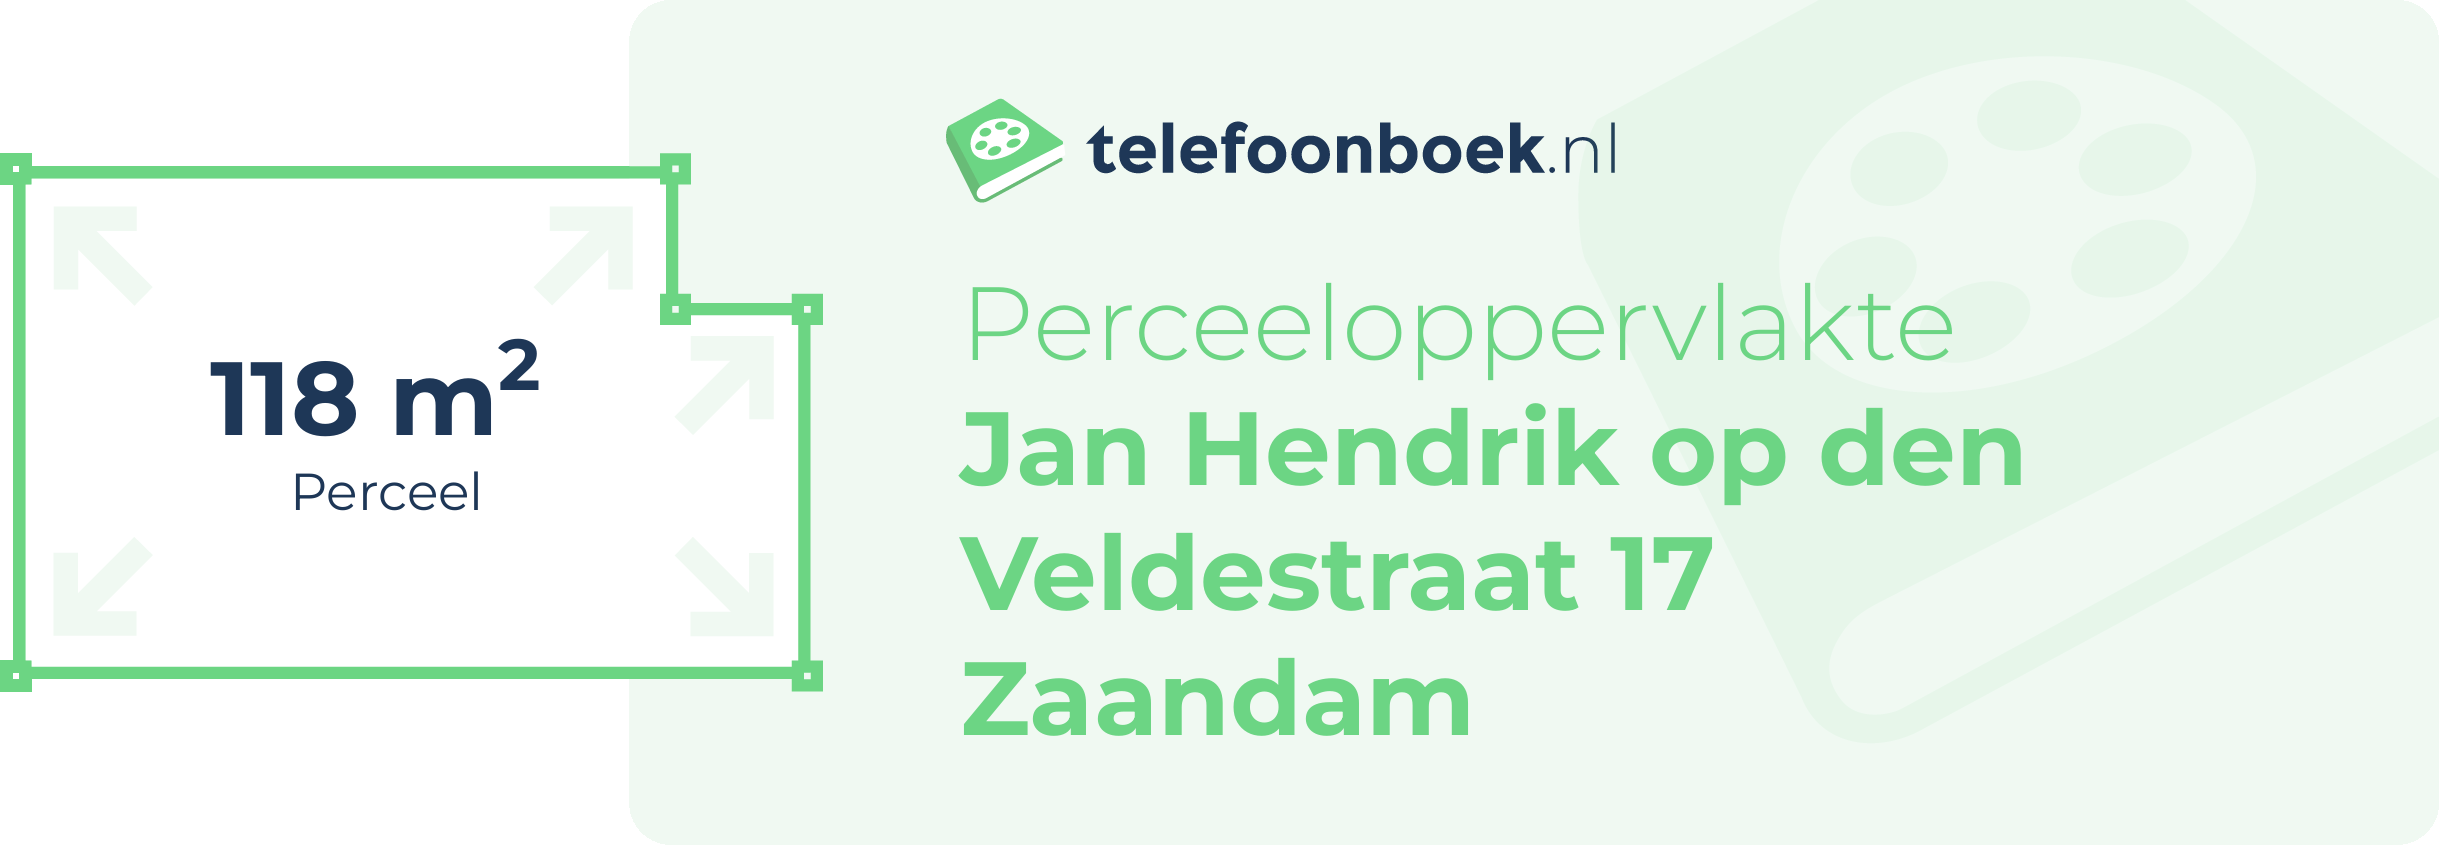 Perceeloppervlakte Jan Hendrik Op Den Veldestraat 17 Zaandam